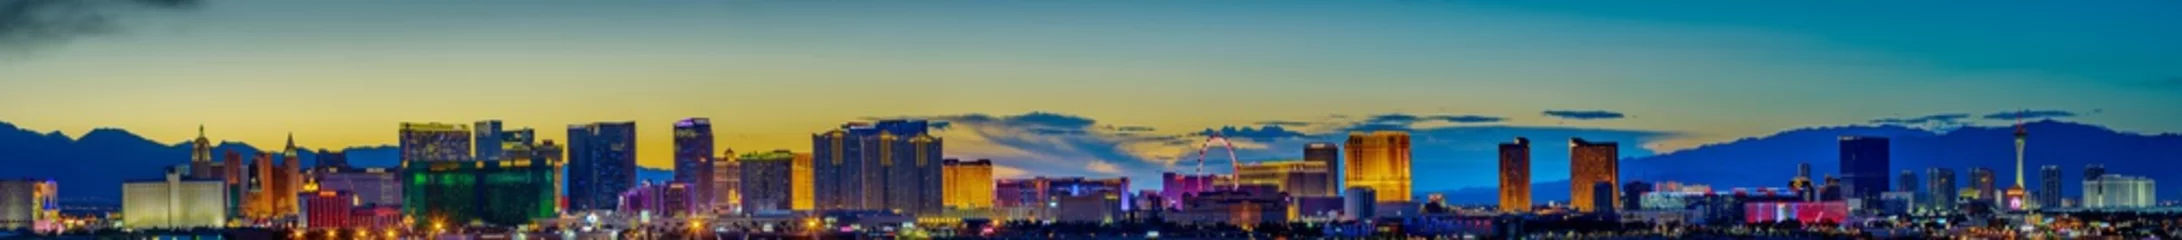 Fototapeten Skyline-Blick bei Sonnenuntergang des berühmten Las Vegas Strip in Weltklasse-Hotels und Casinos, NV © yooranpark